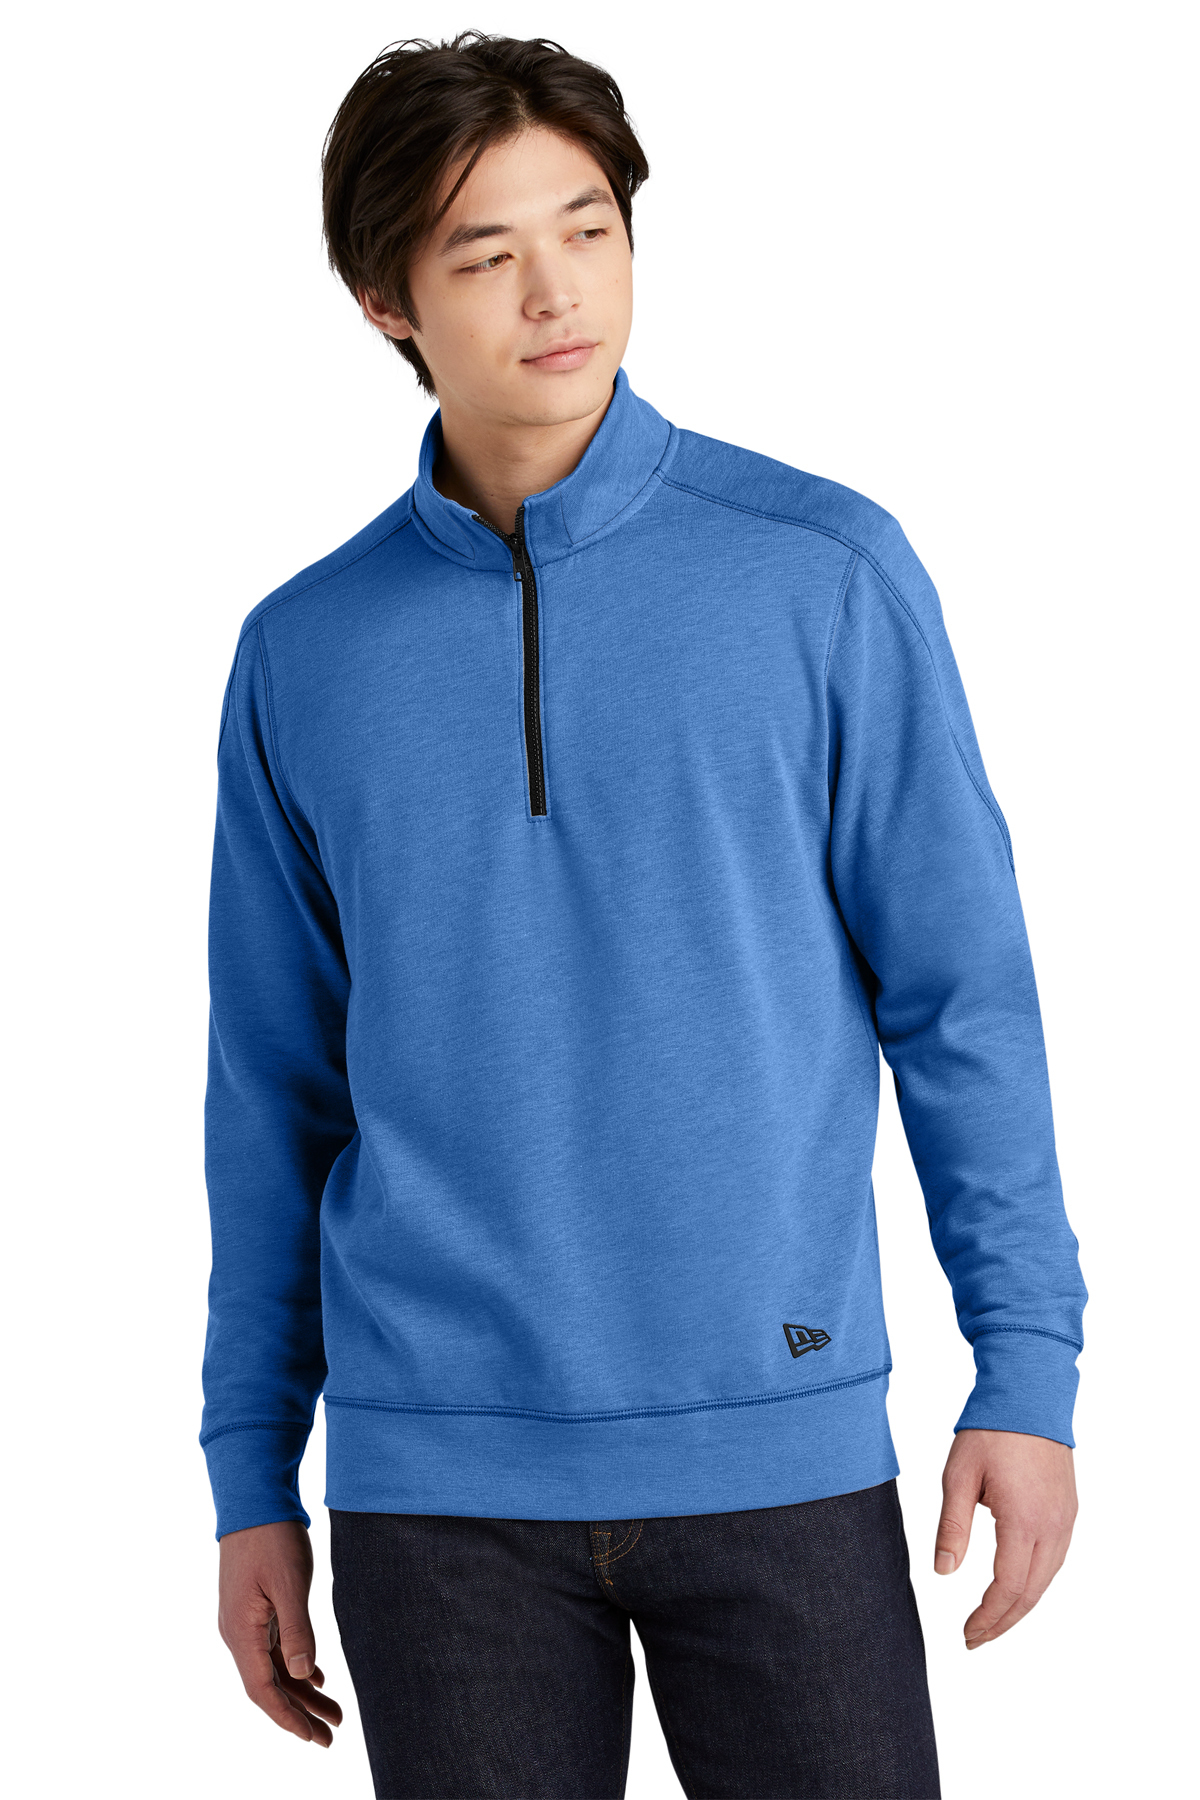 New Era Embroidered Men's Tri-Blend Fleece Pullover Hoodie - Queensboro